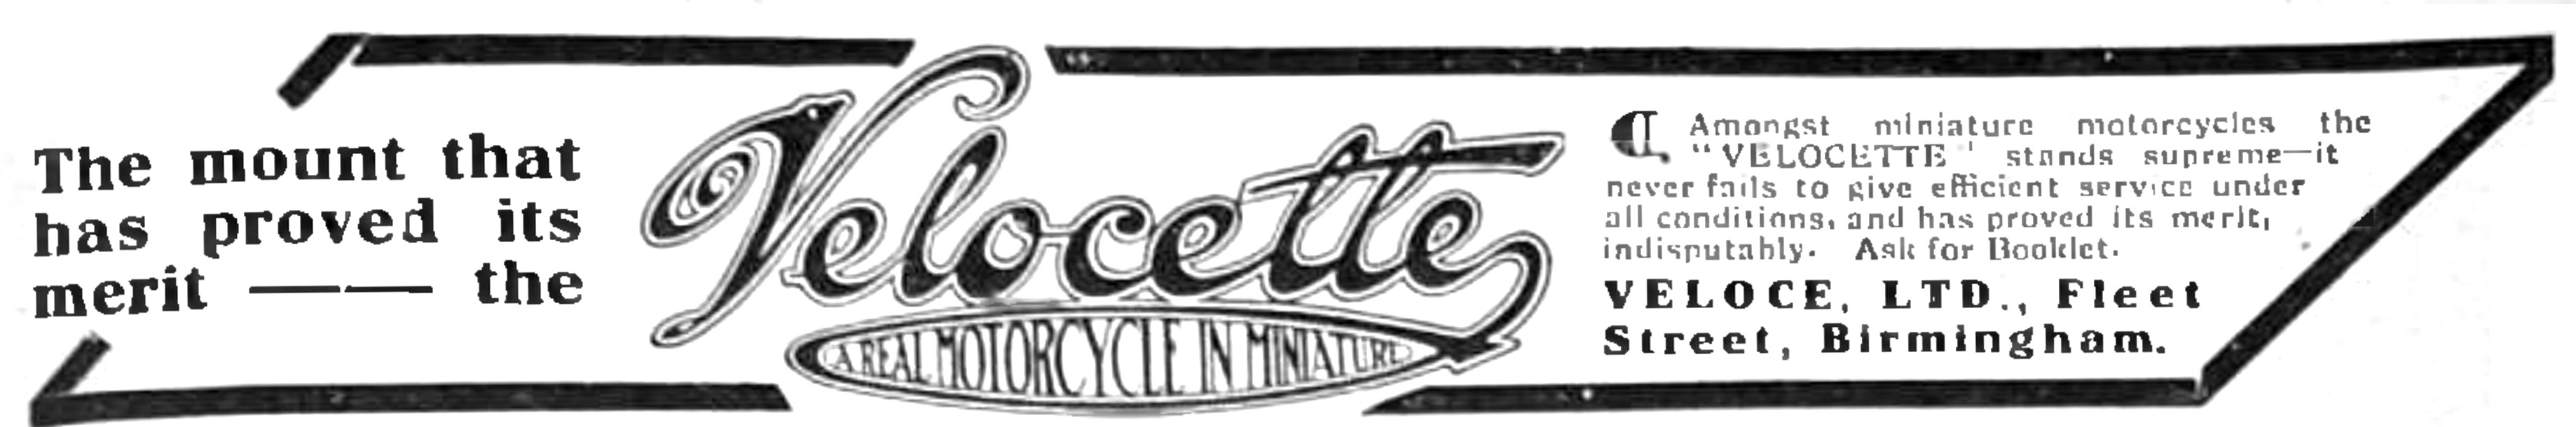 Velocette Motor Cycles 1915 Advert                               